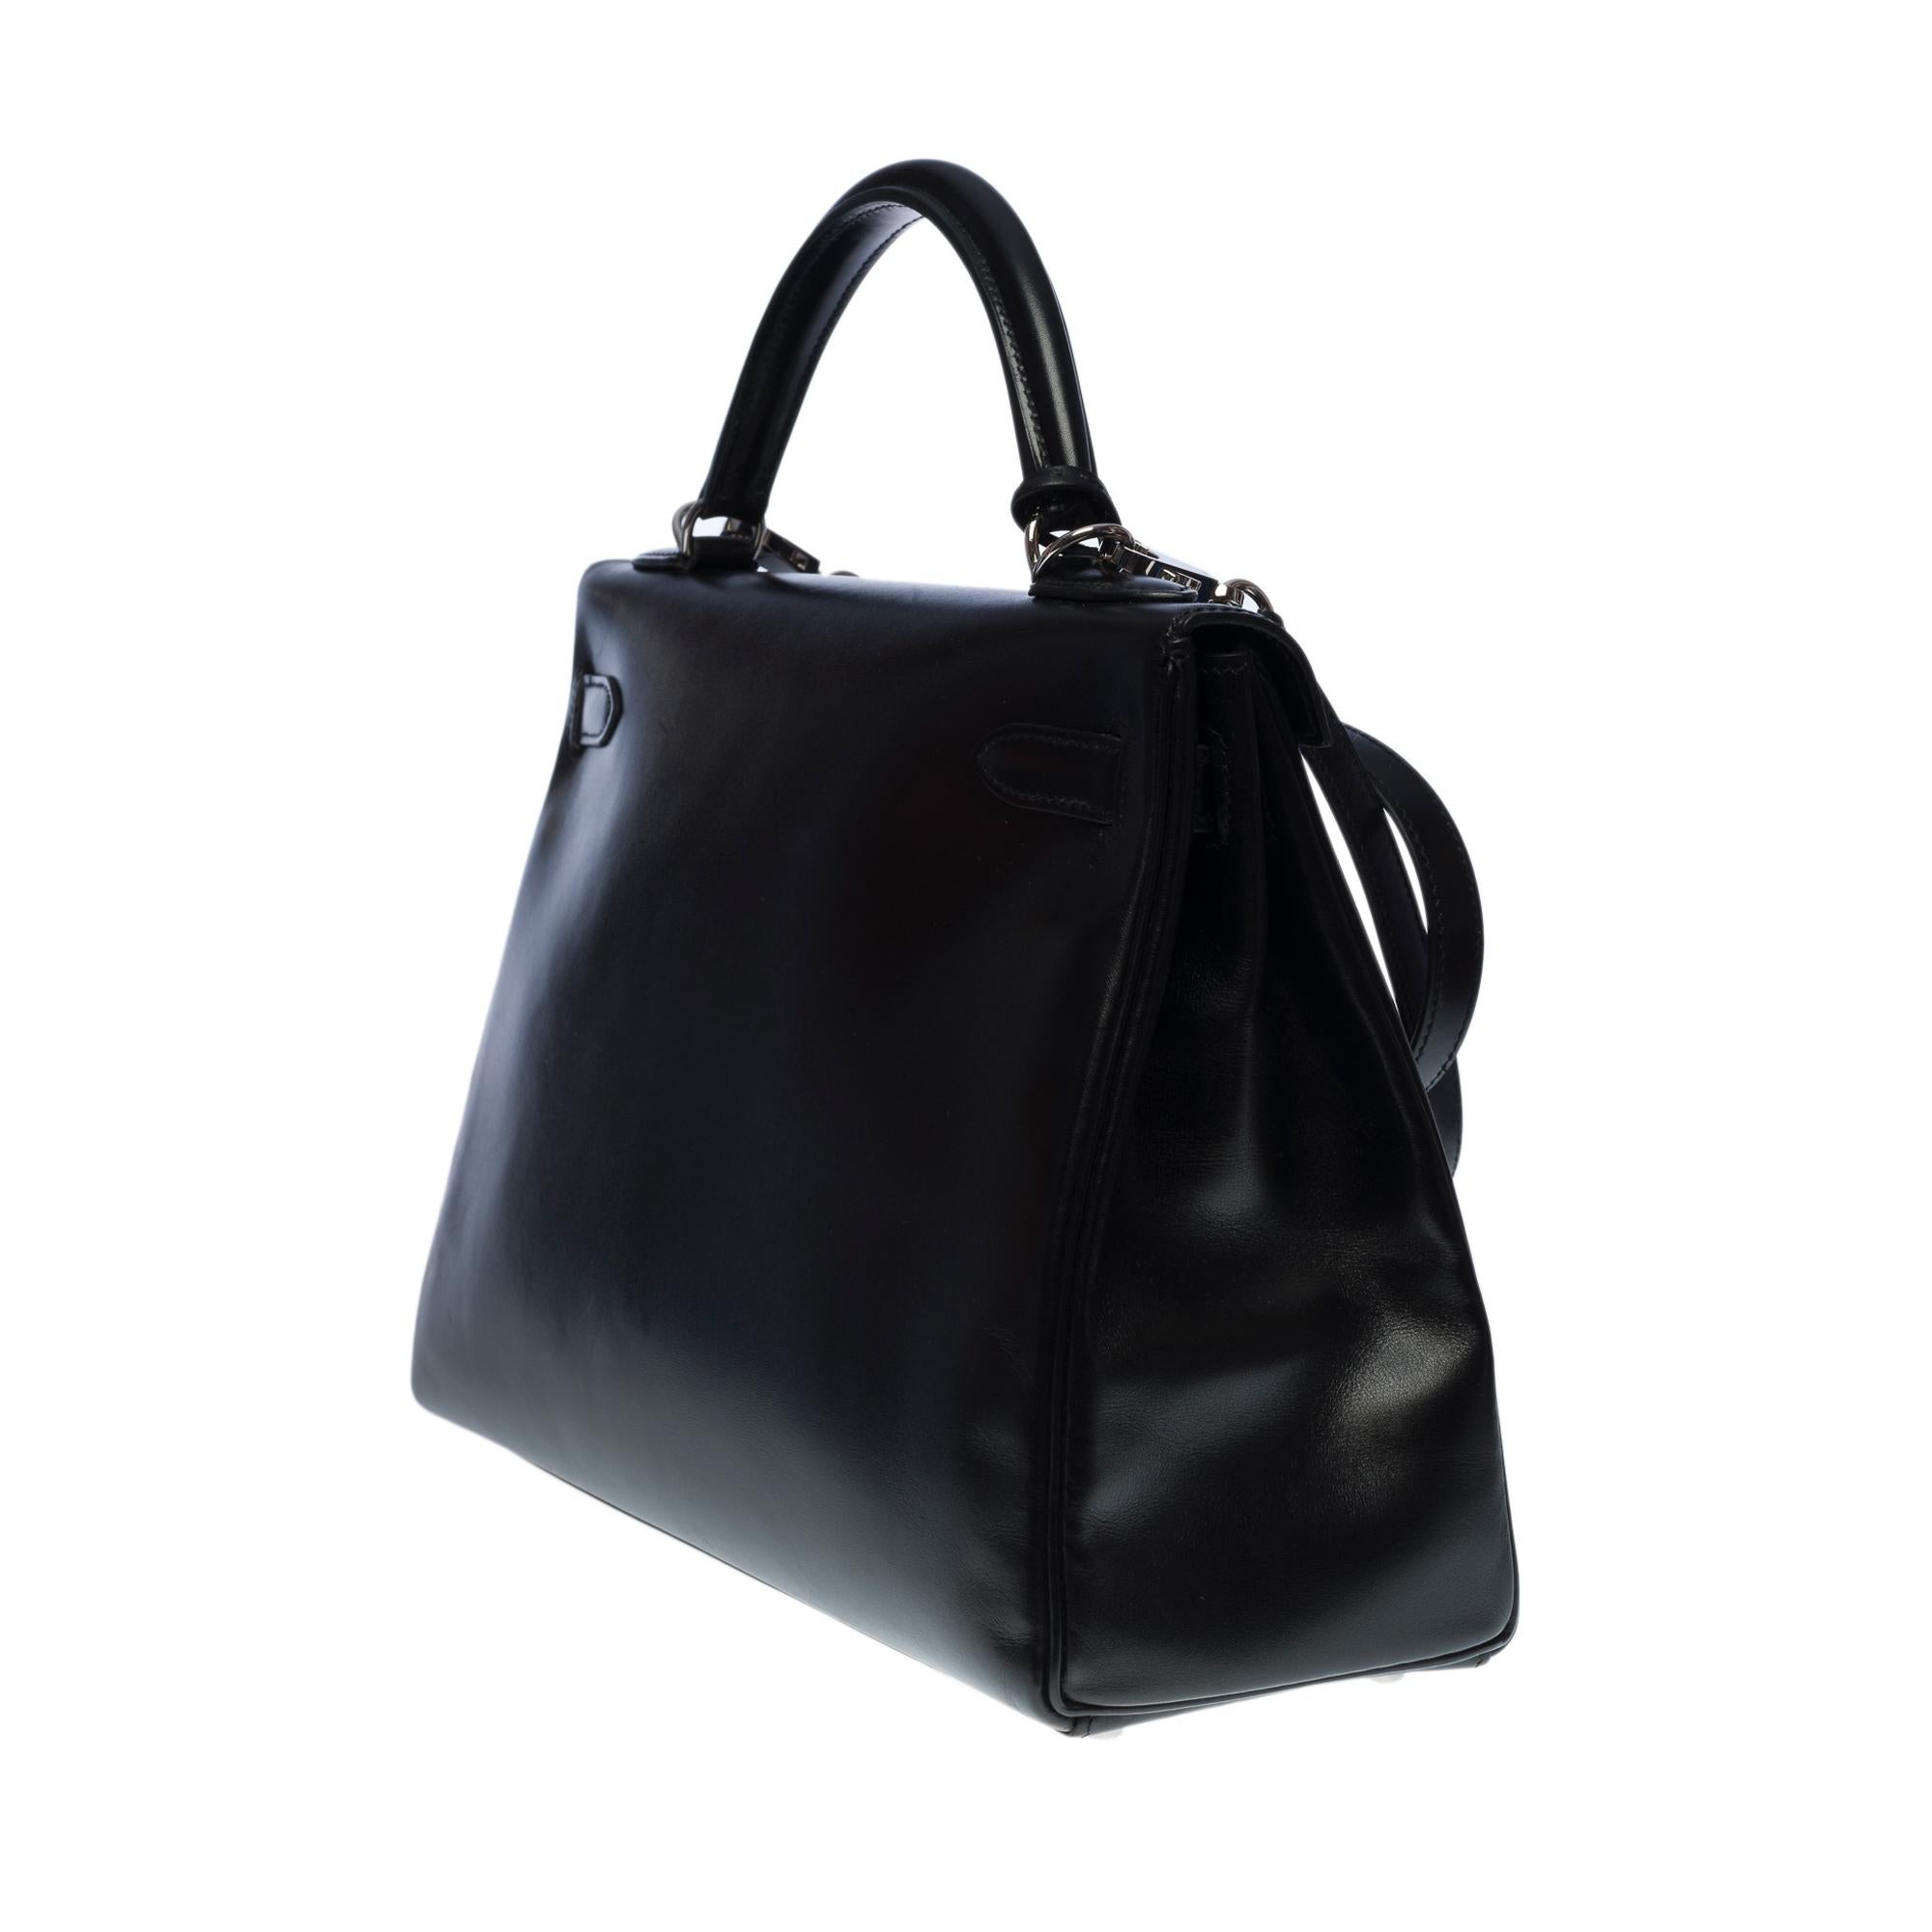 Women's or Men's Rare Hermès Kelly 32 retourne handbag strap in black box calf leather, SHW